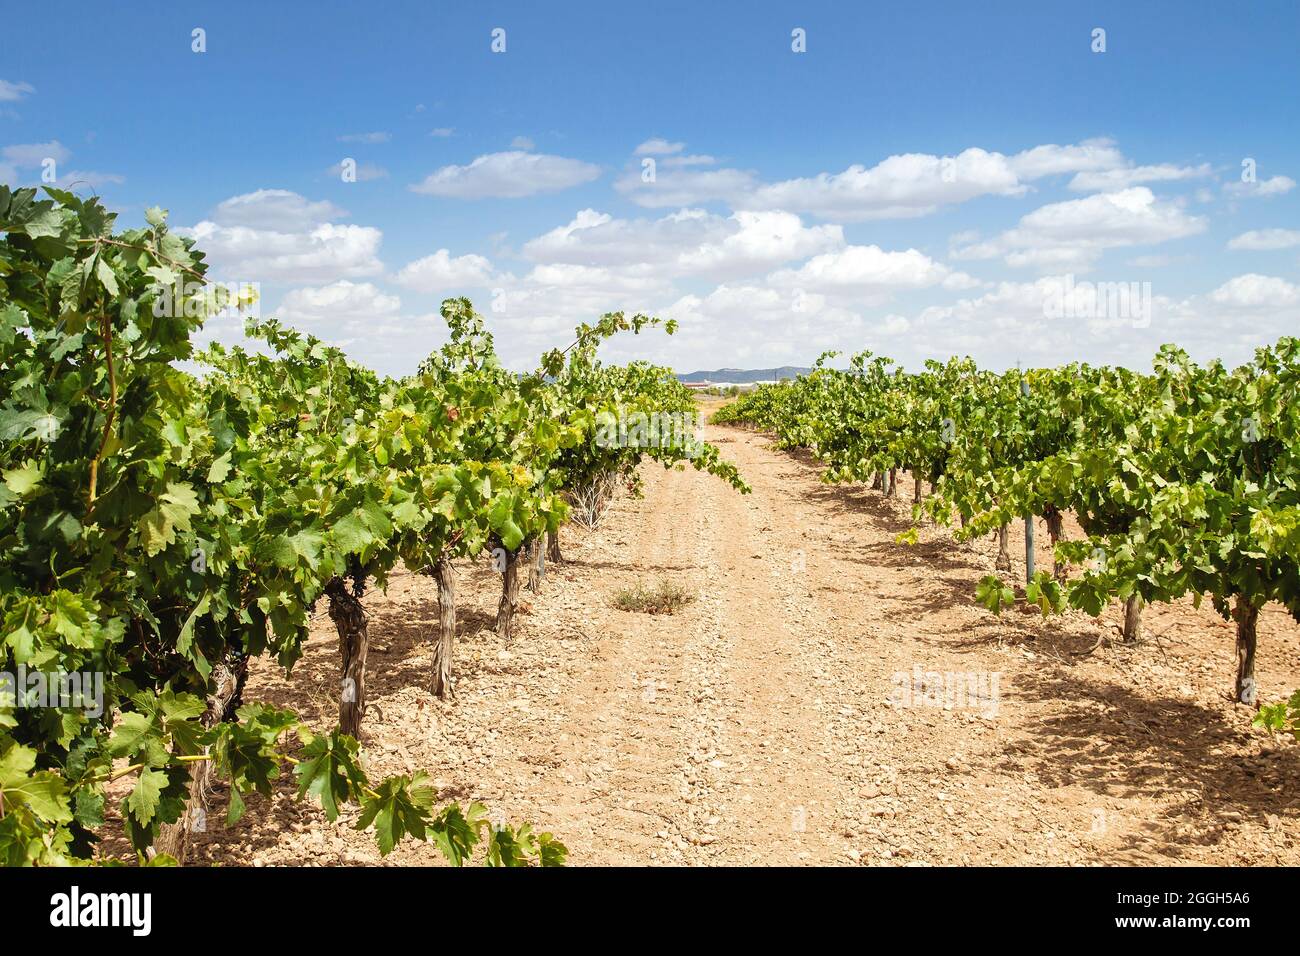 Vitis vinifera grape vines cultivated in making farm vineyard in La Mancha, Spain Stock Photo